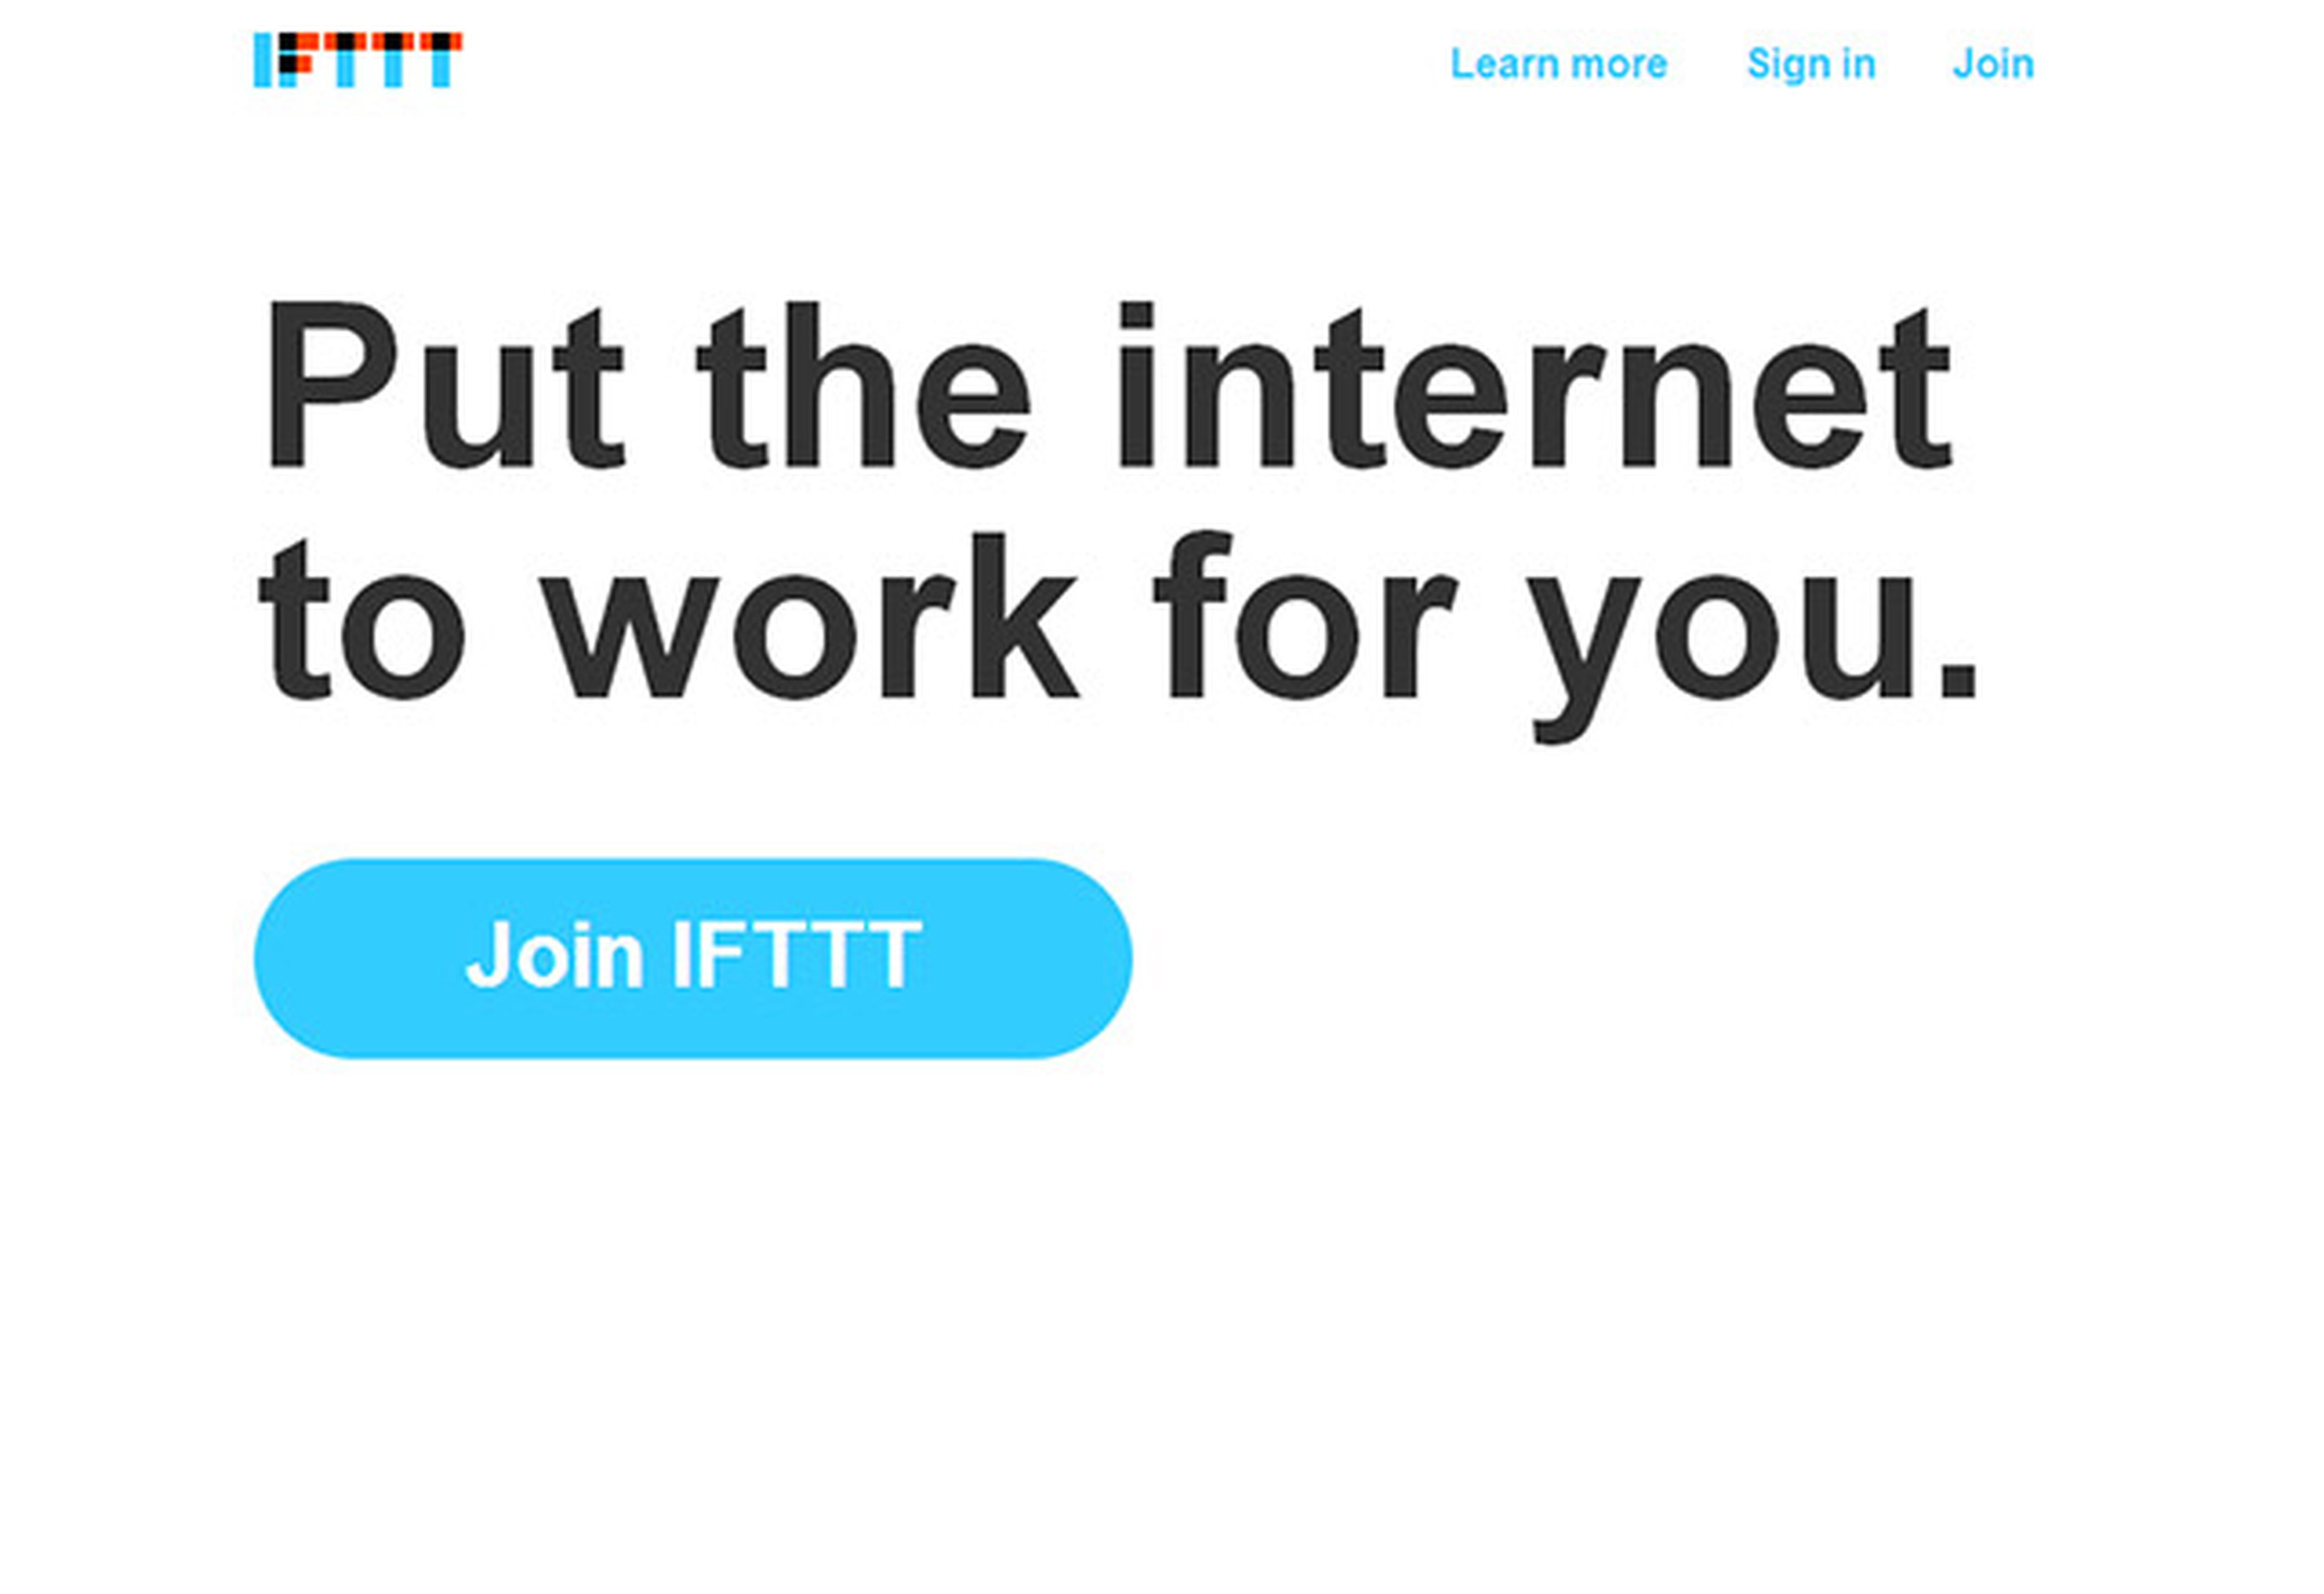 Regístrate en IFTT